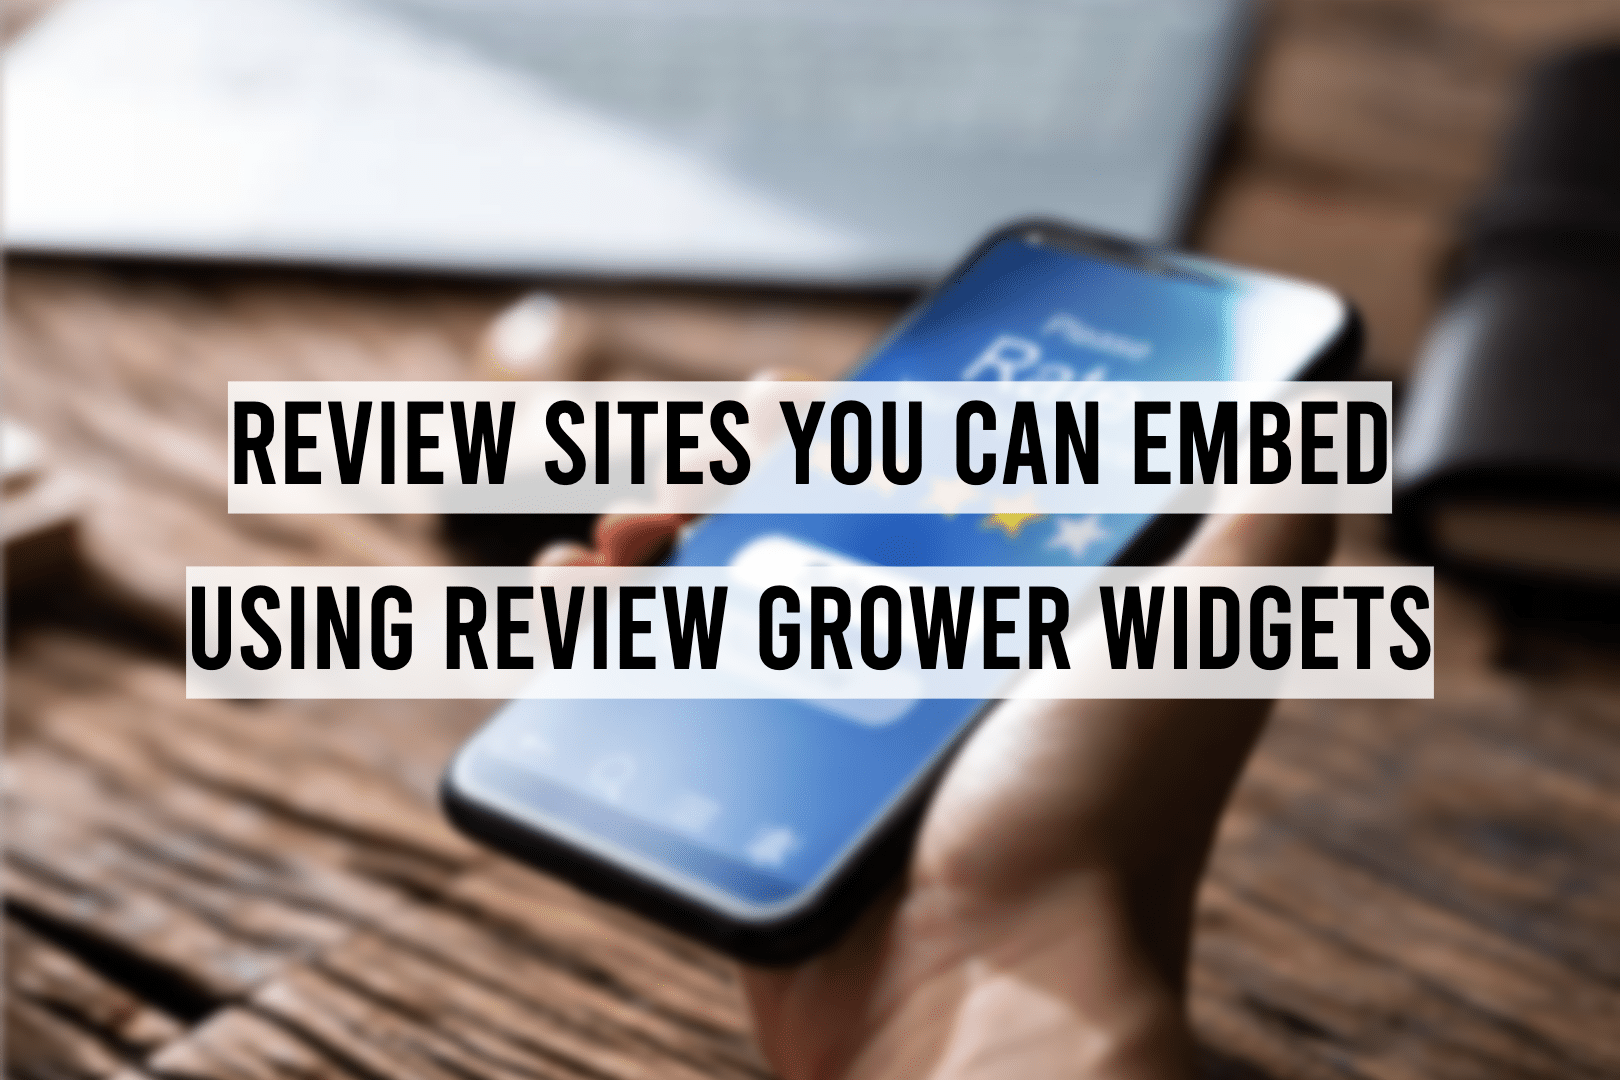 reviewgrower widgets